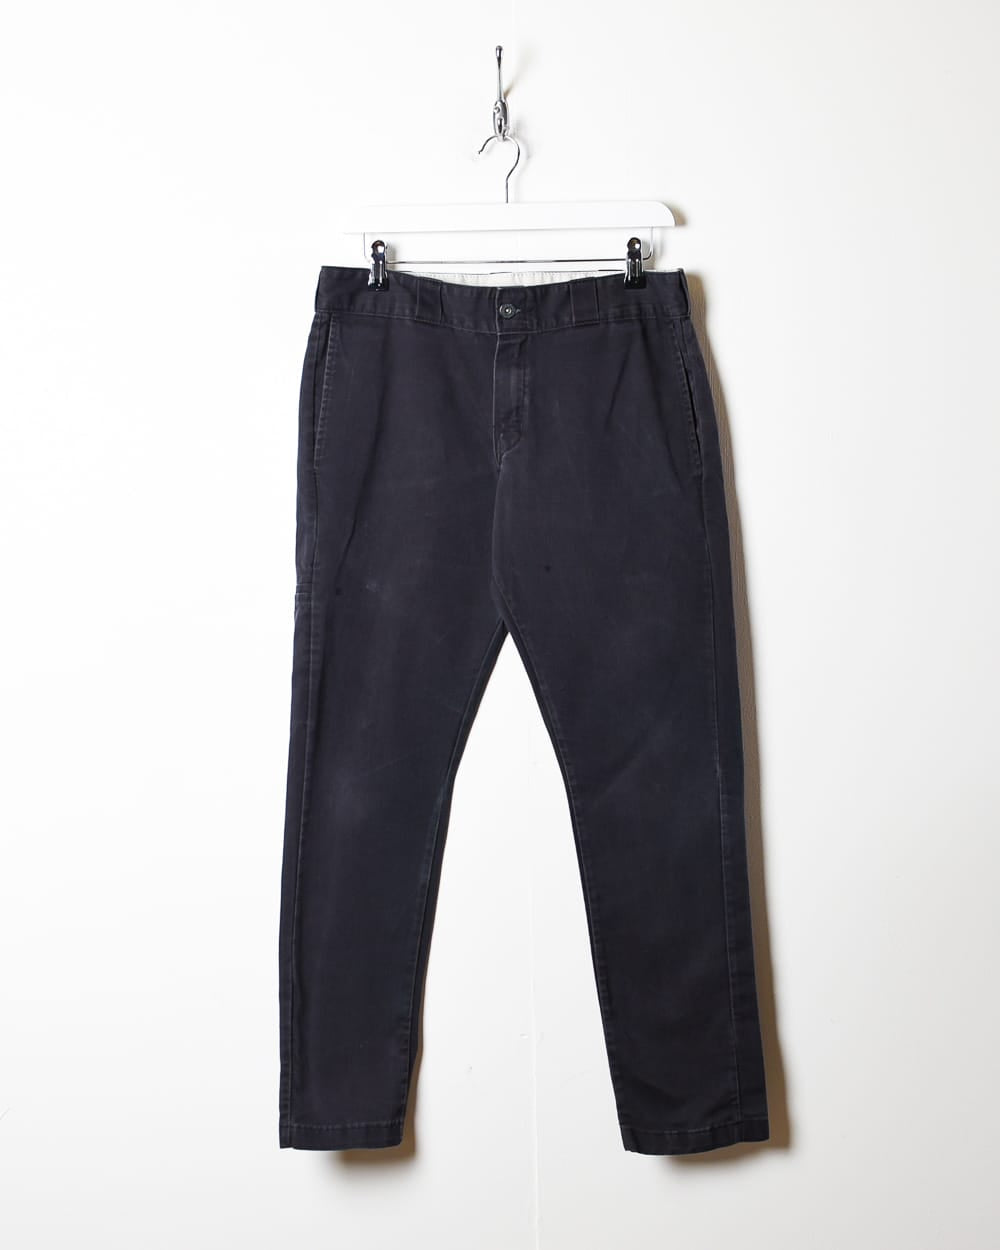 Black Dickies Skinny Straight Trousers - W32 L29